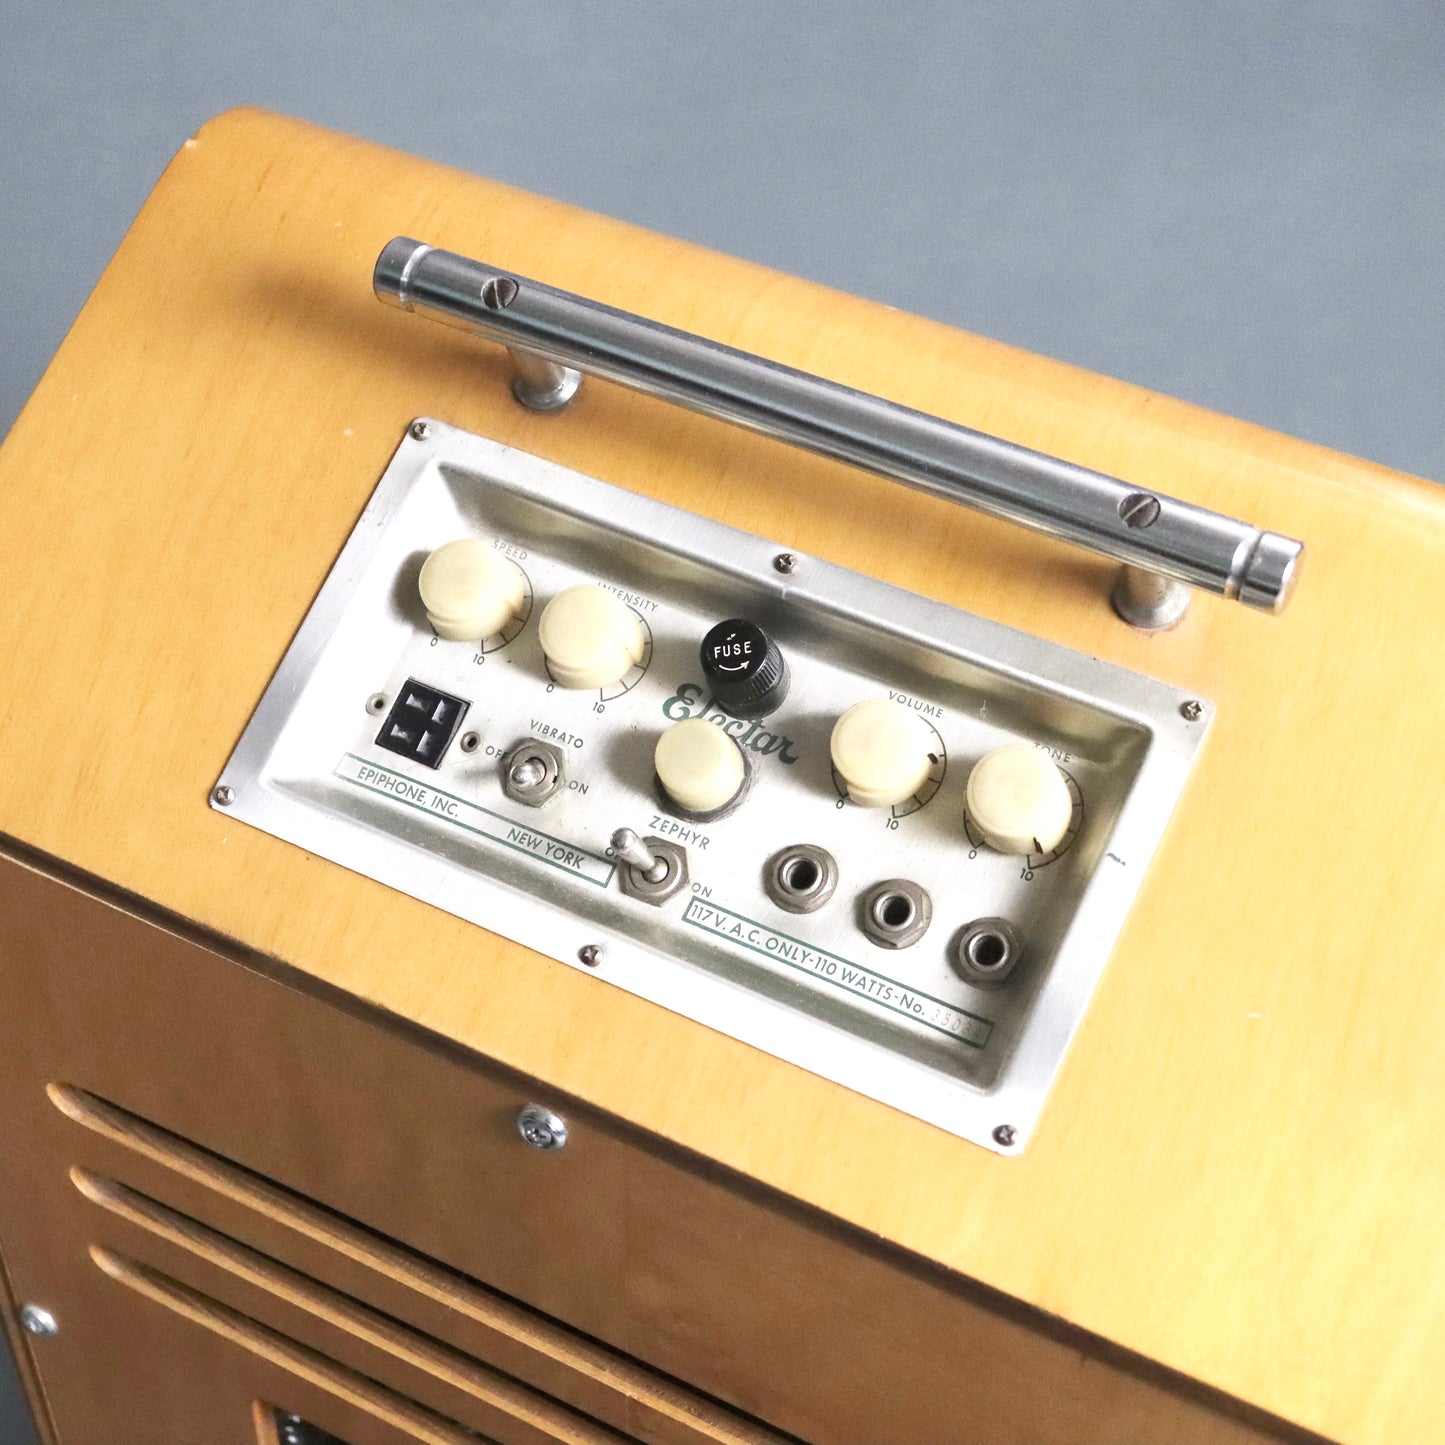 CLEAN 1940s Epiphone Electar Zephyr Tube Guitar Amplifier Art Deco Maple Amp